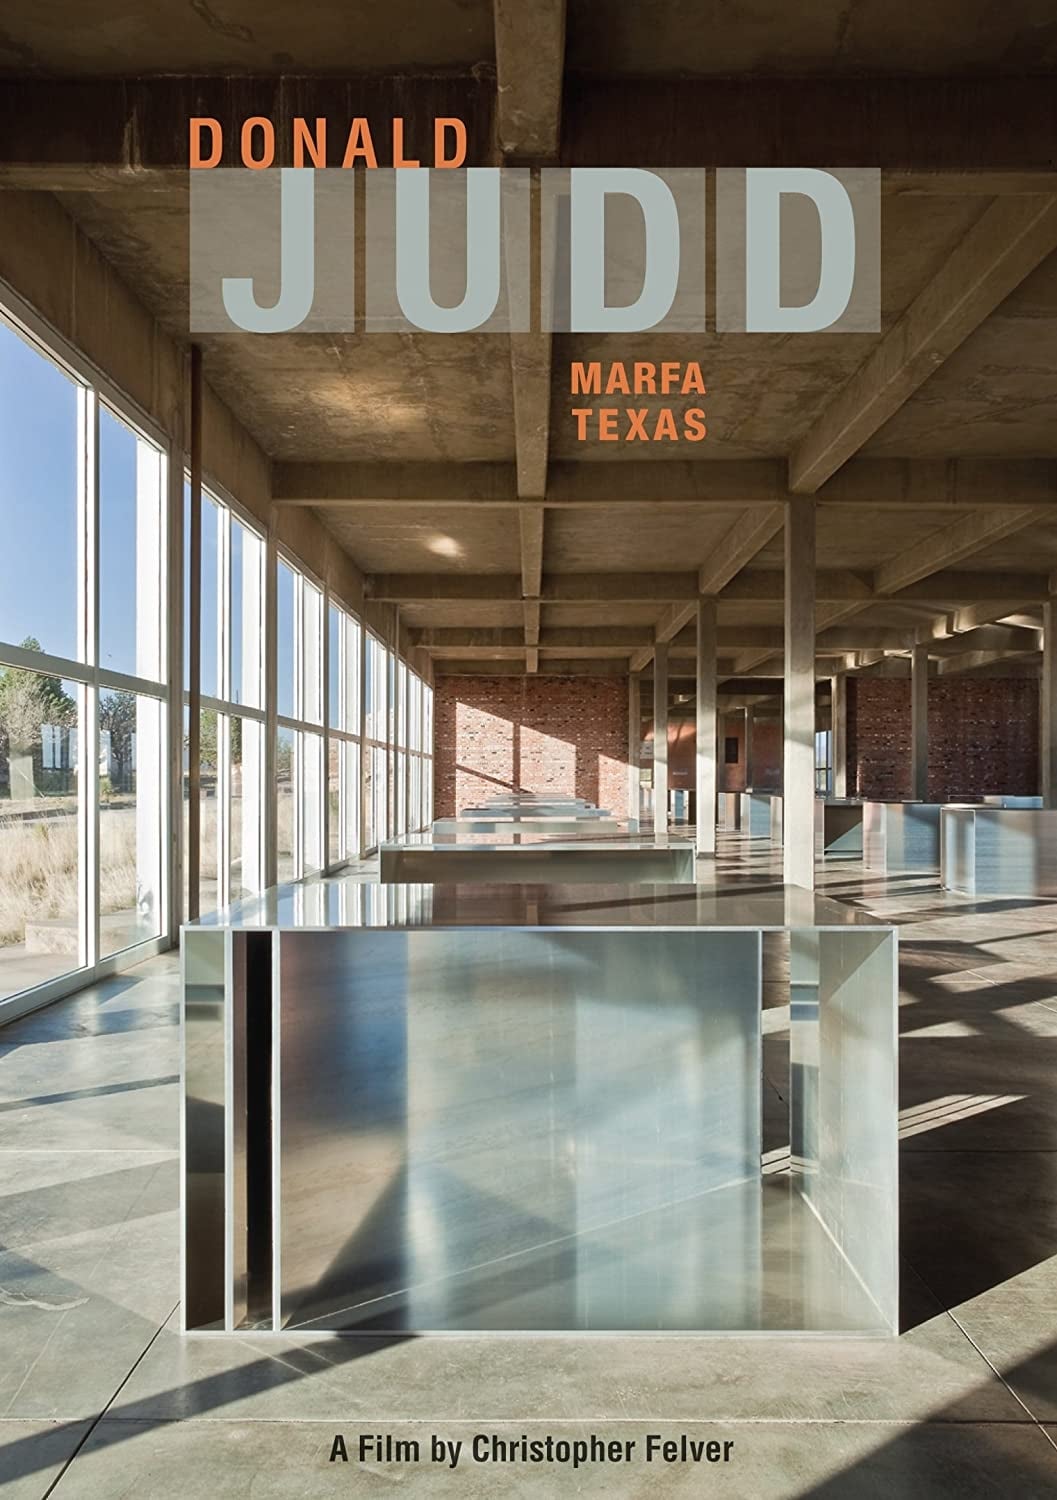 Donald Judd: Marfa Texas